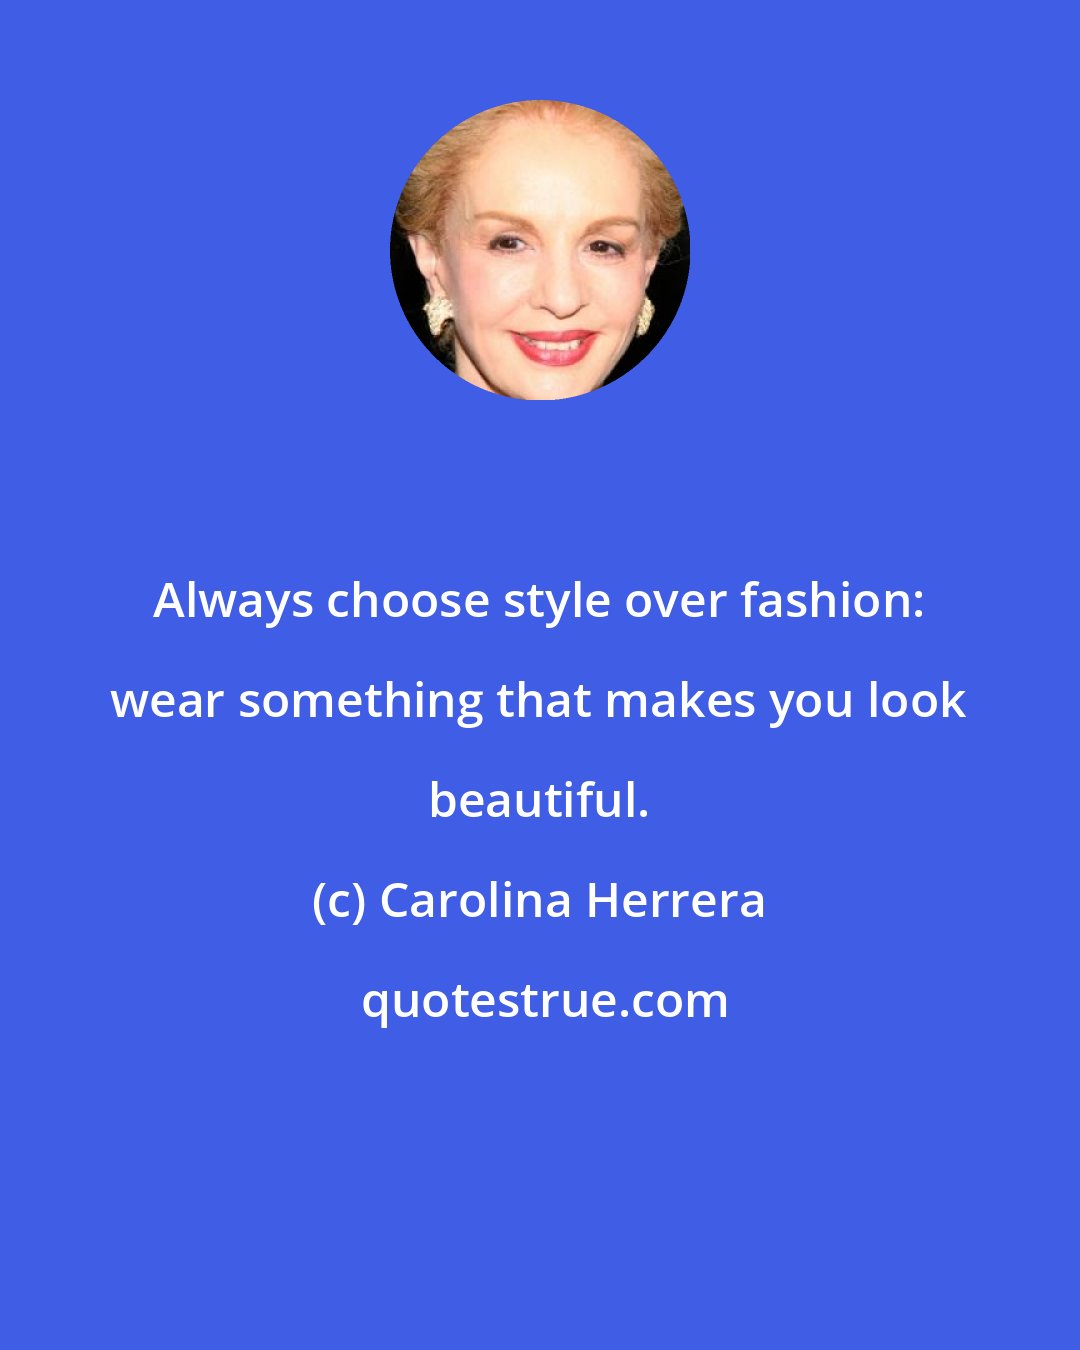 Carolina Herrera: Always choose style over fashion: wear something that makes you look beautiful.